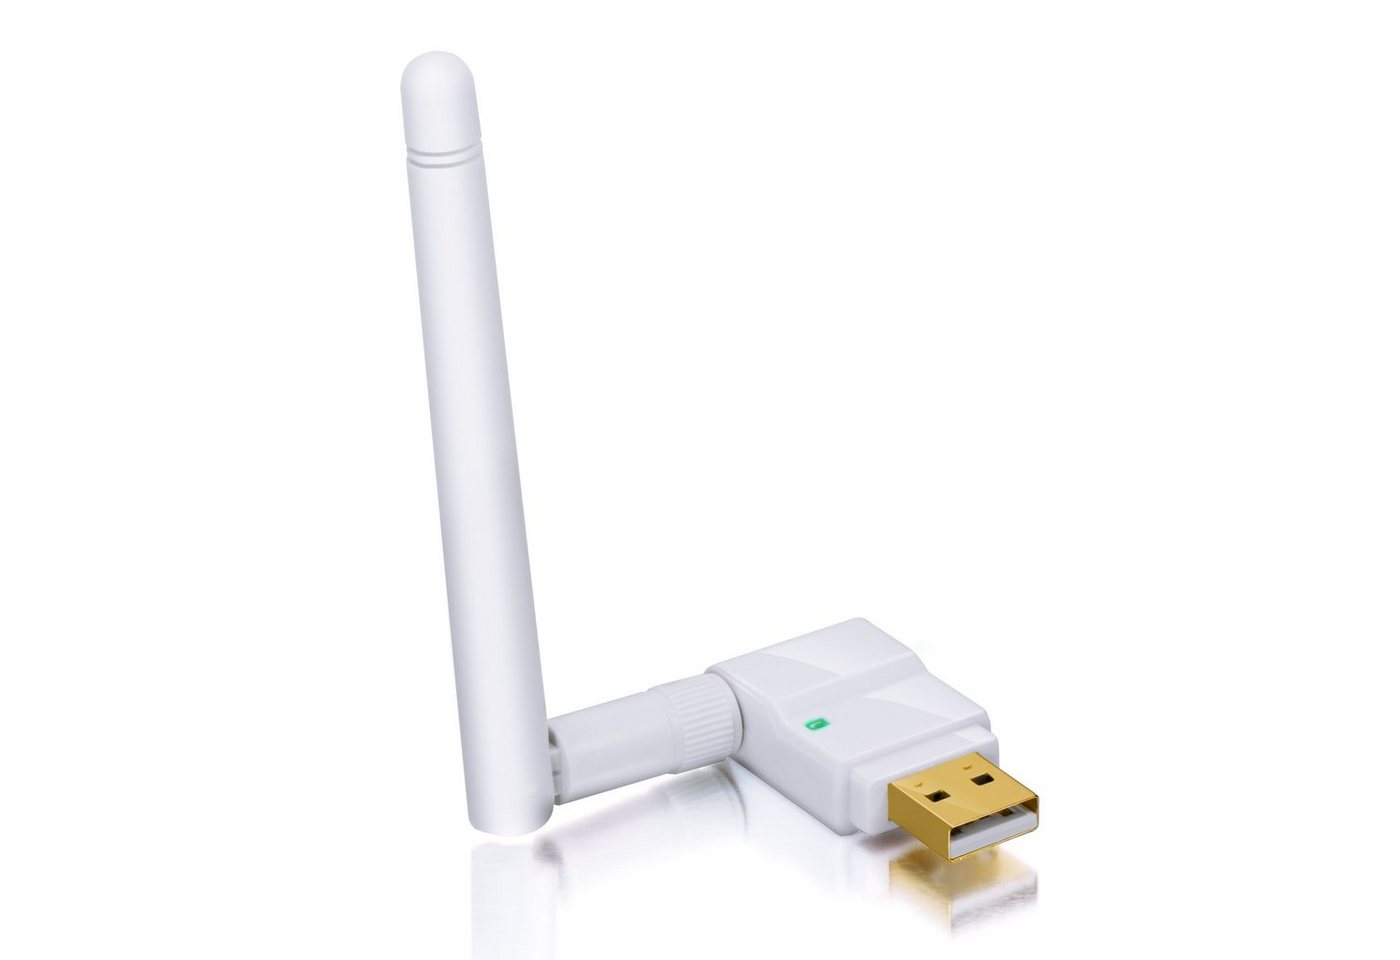 CSL WLAN-Dongle, WLAN Stick, 300 Mbit/s, mit abnehmbarer Antenne, USB 2.0 Stick von CSL